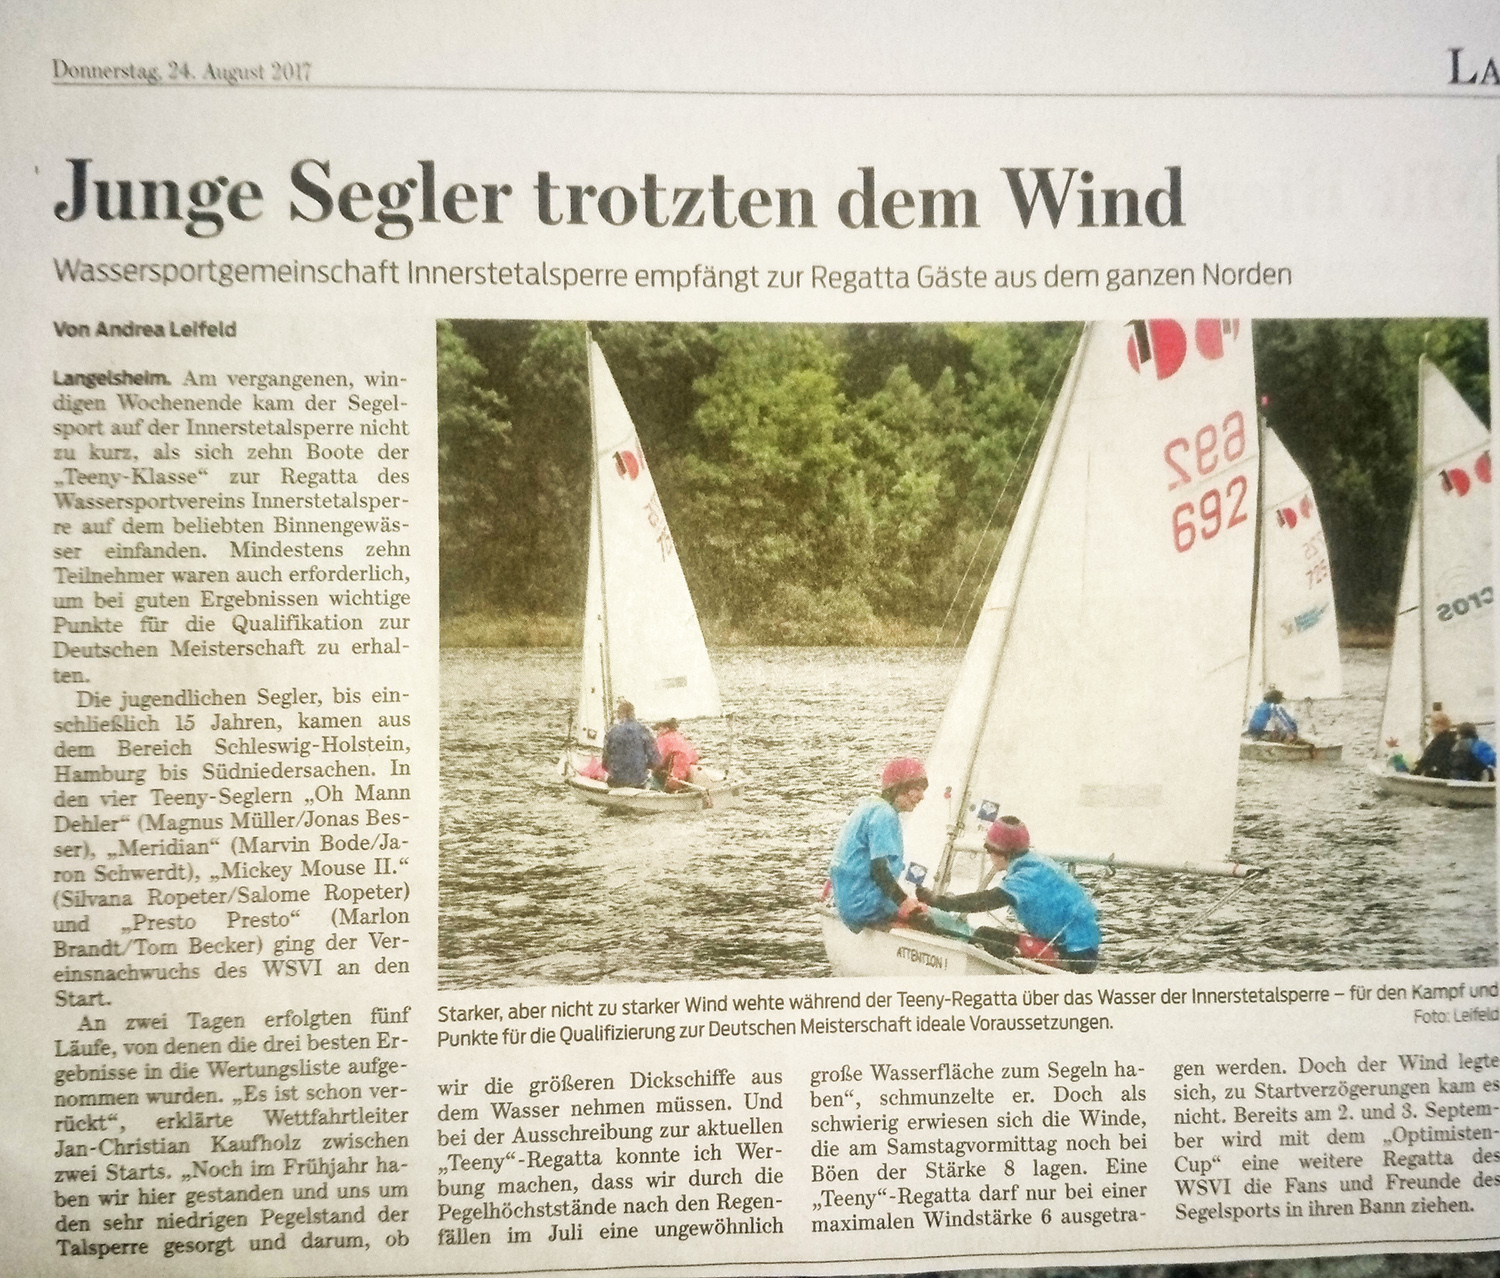 Teeny-Regatta: Junge Segler trotzten dem Wind